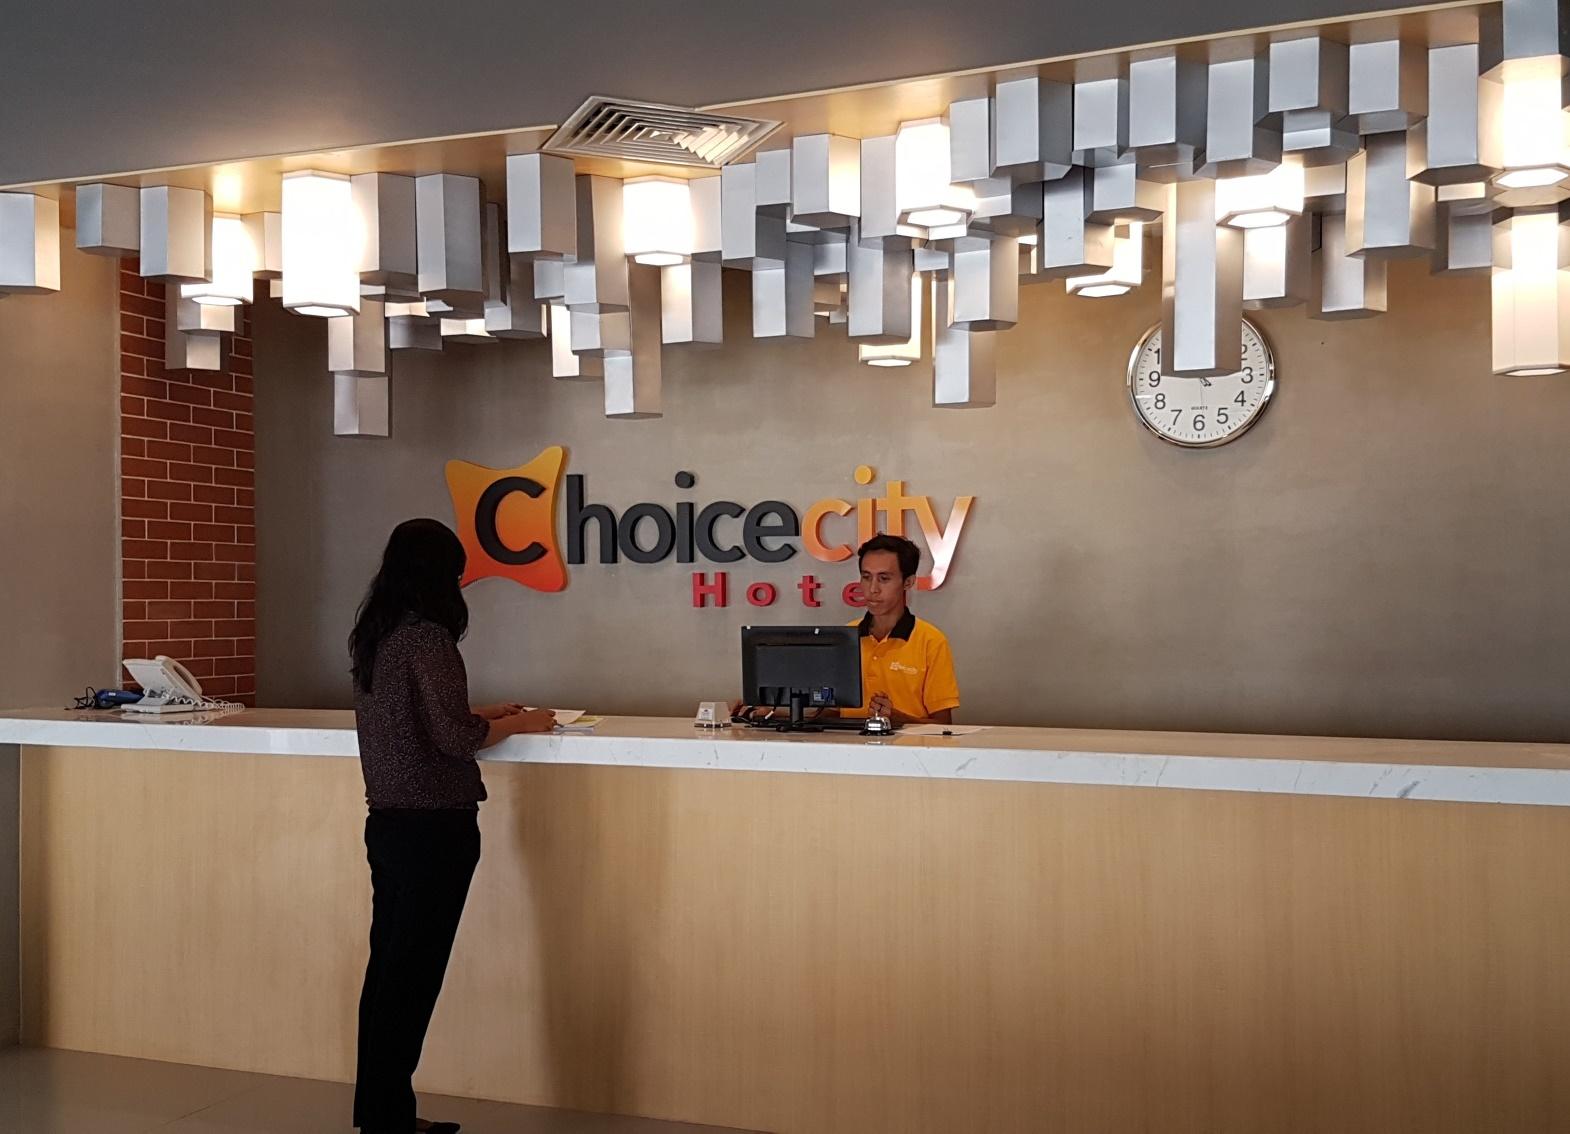 Choice City Hotel image 1